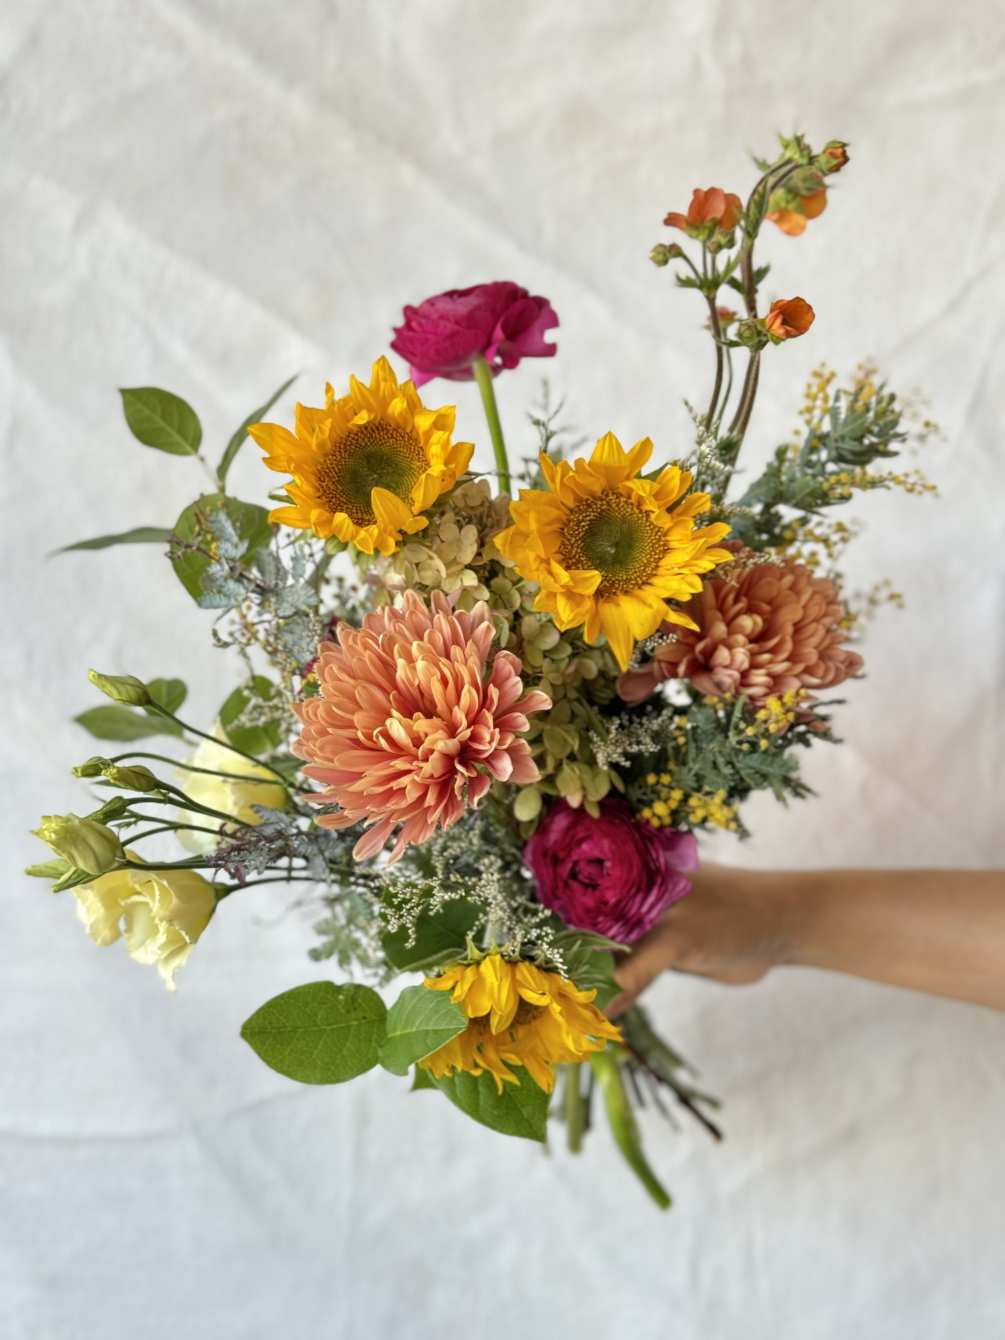 Experience a truly unique and captivating floral arrangement. Our florists craft each